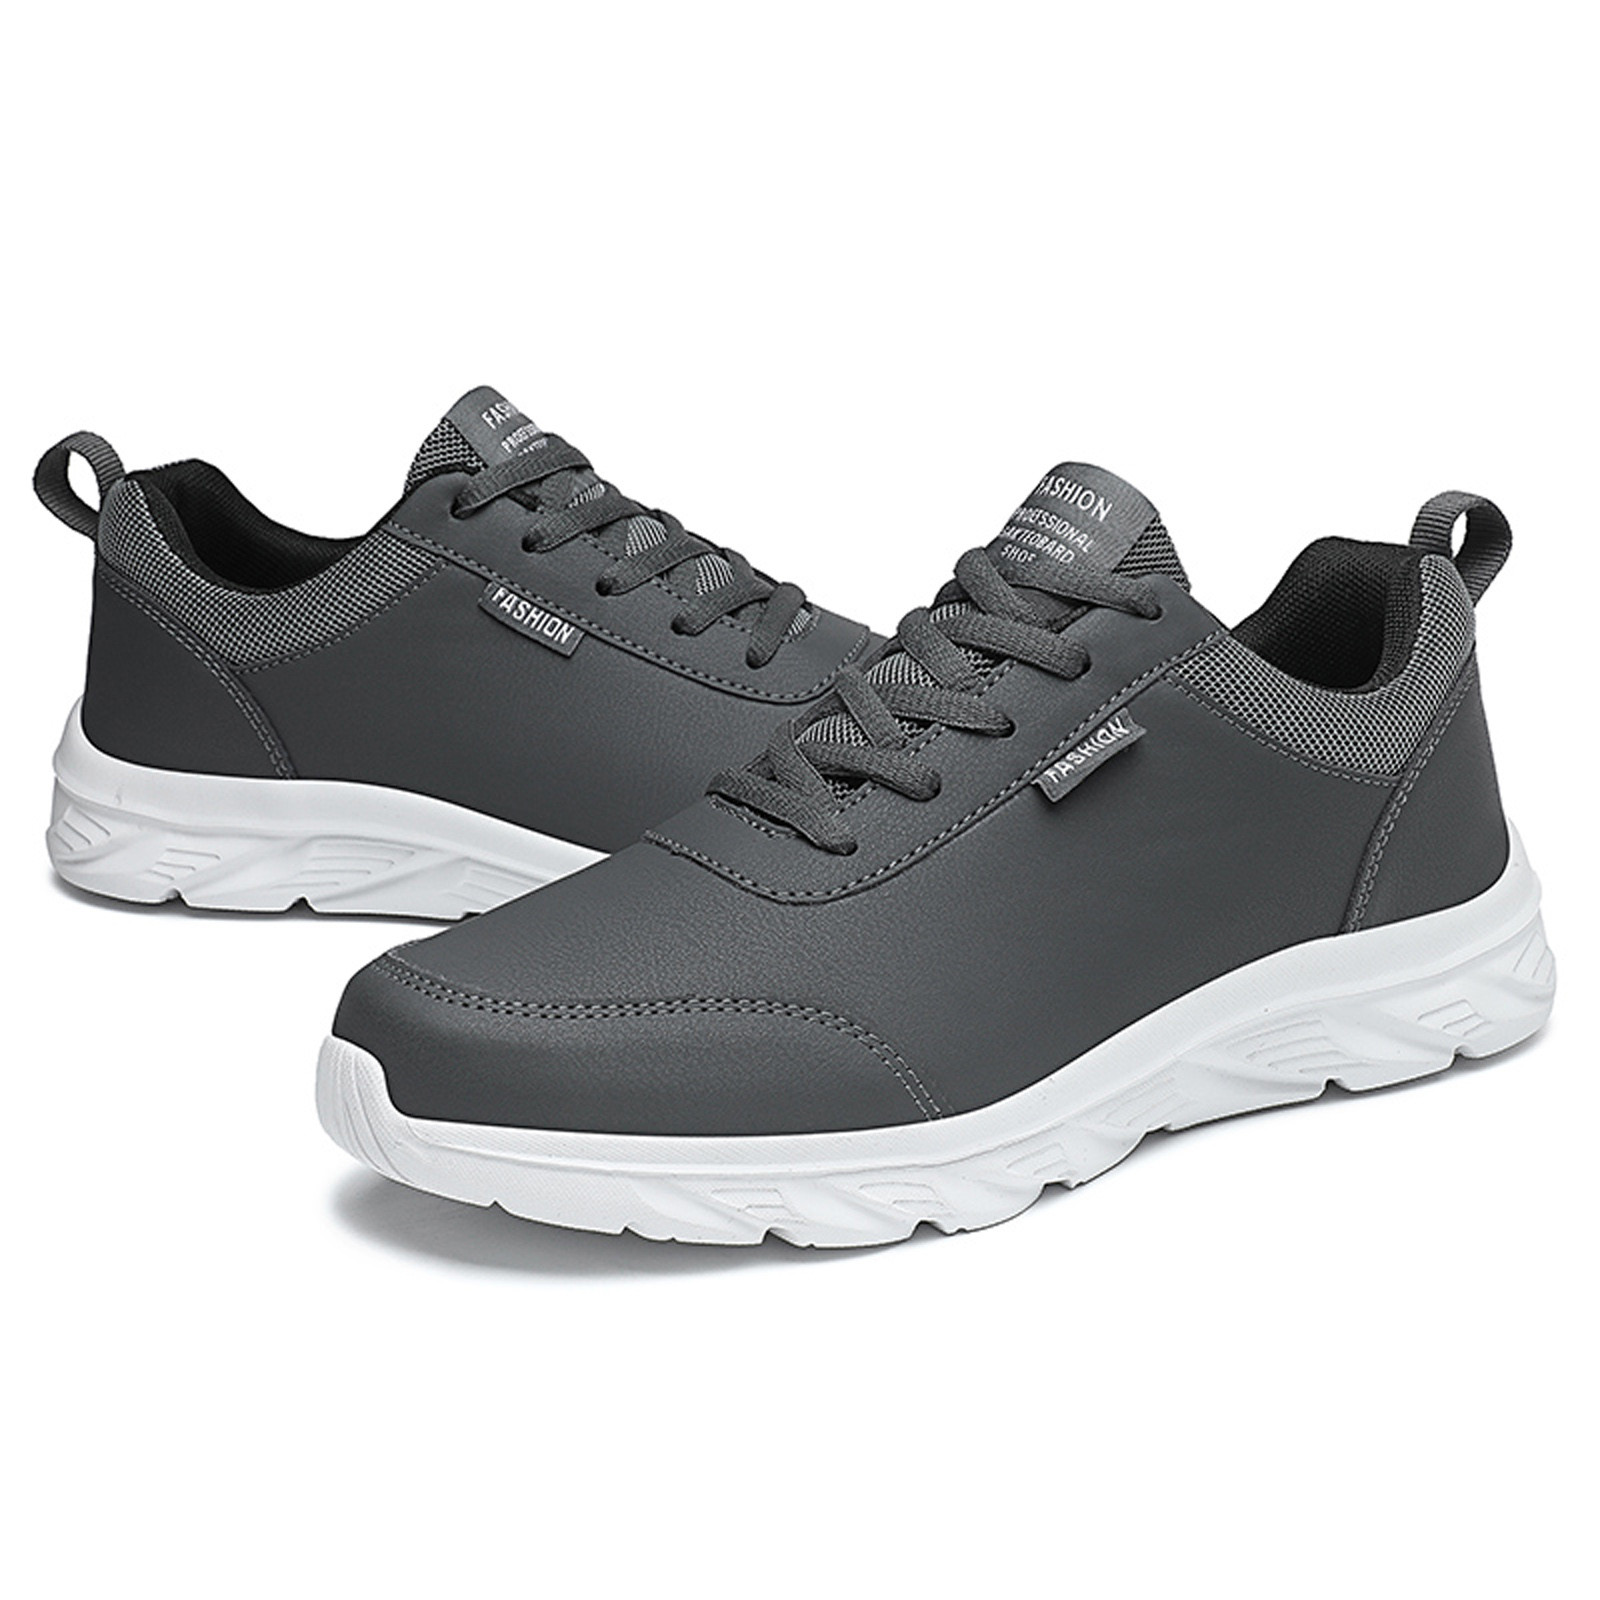 PEASKJP Mens Golf Shoes Men Soft Flat Breathable Comfortable Non Slip Sneaker Gym Tennis Shoes Grey 8.5 - image 3 of 5